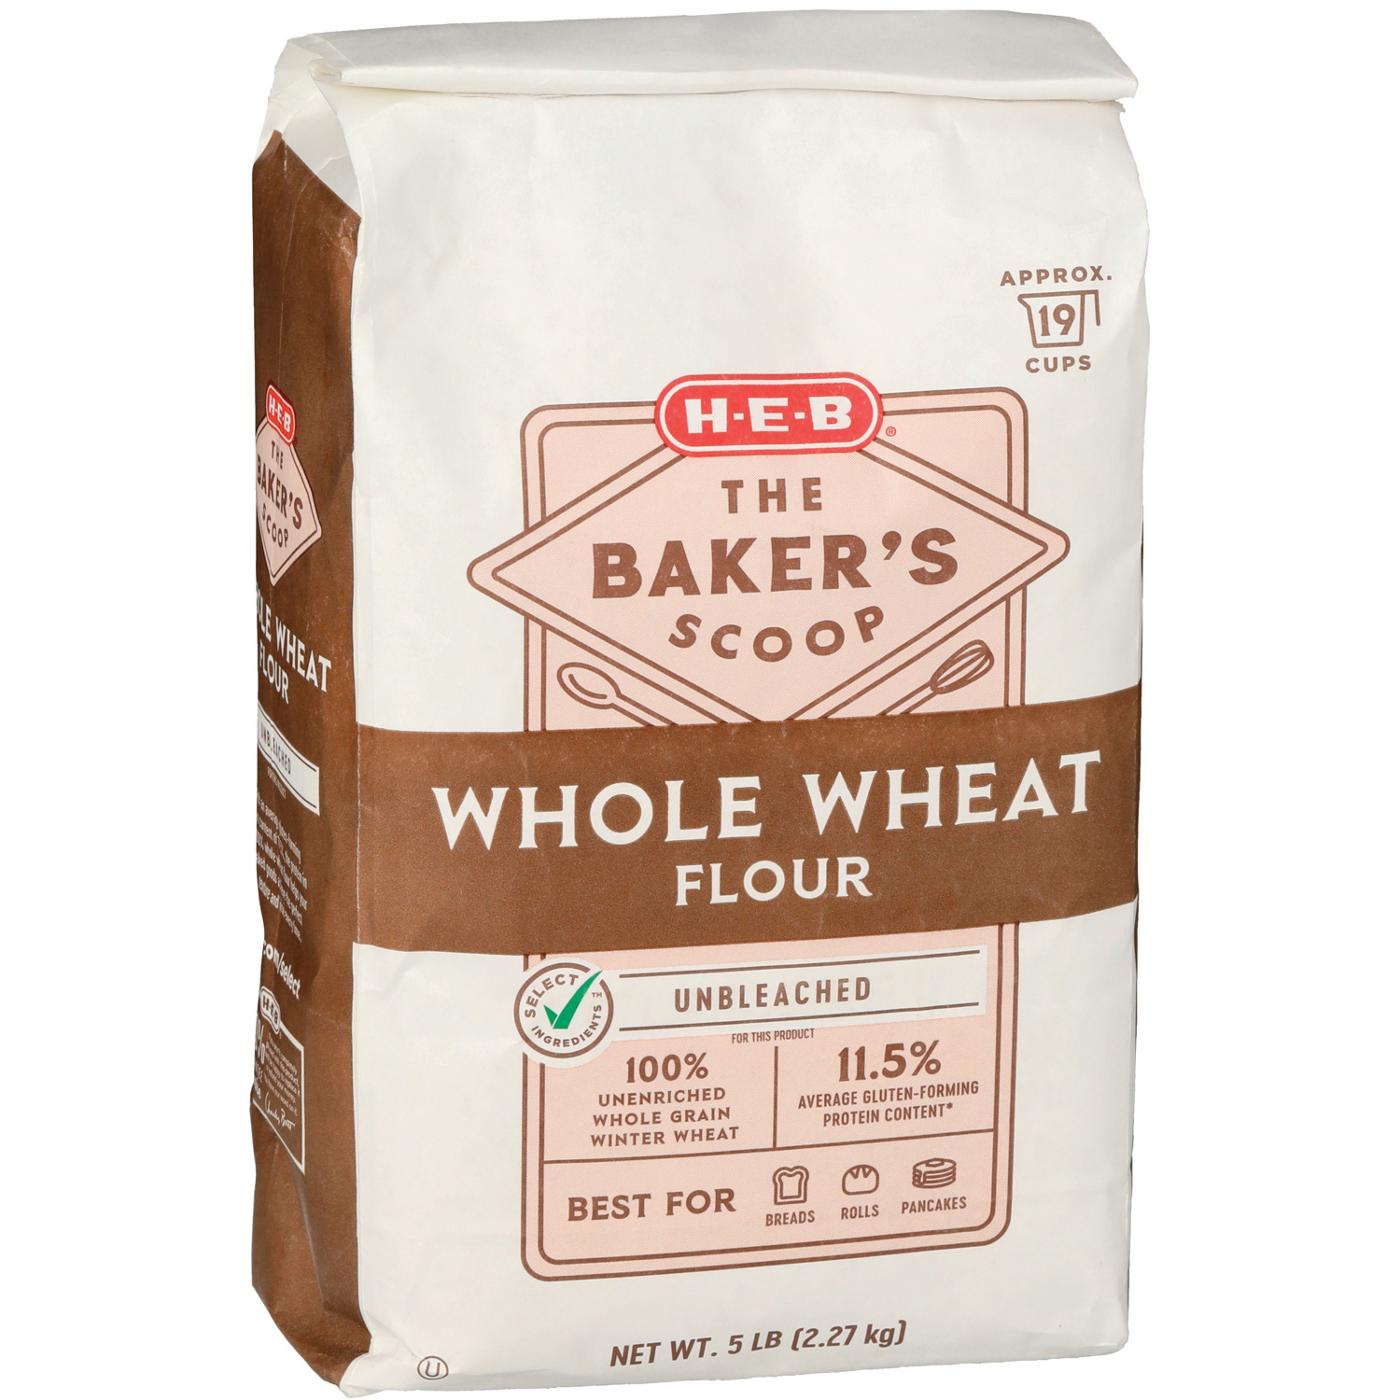 H-E-B The Baker's Scoop Unbleached Whole Wheat Flour; image 2 of 2